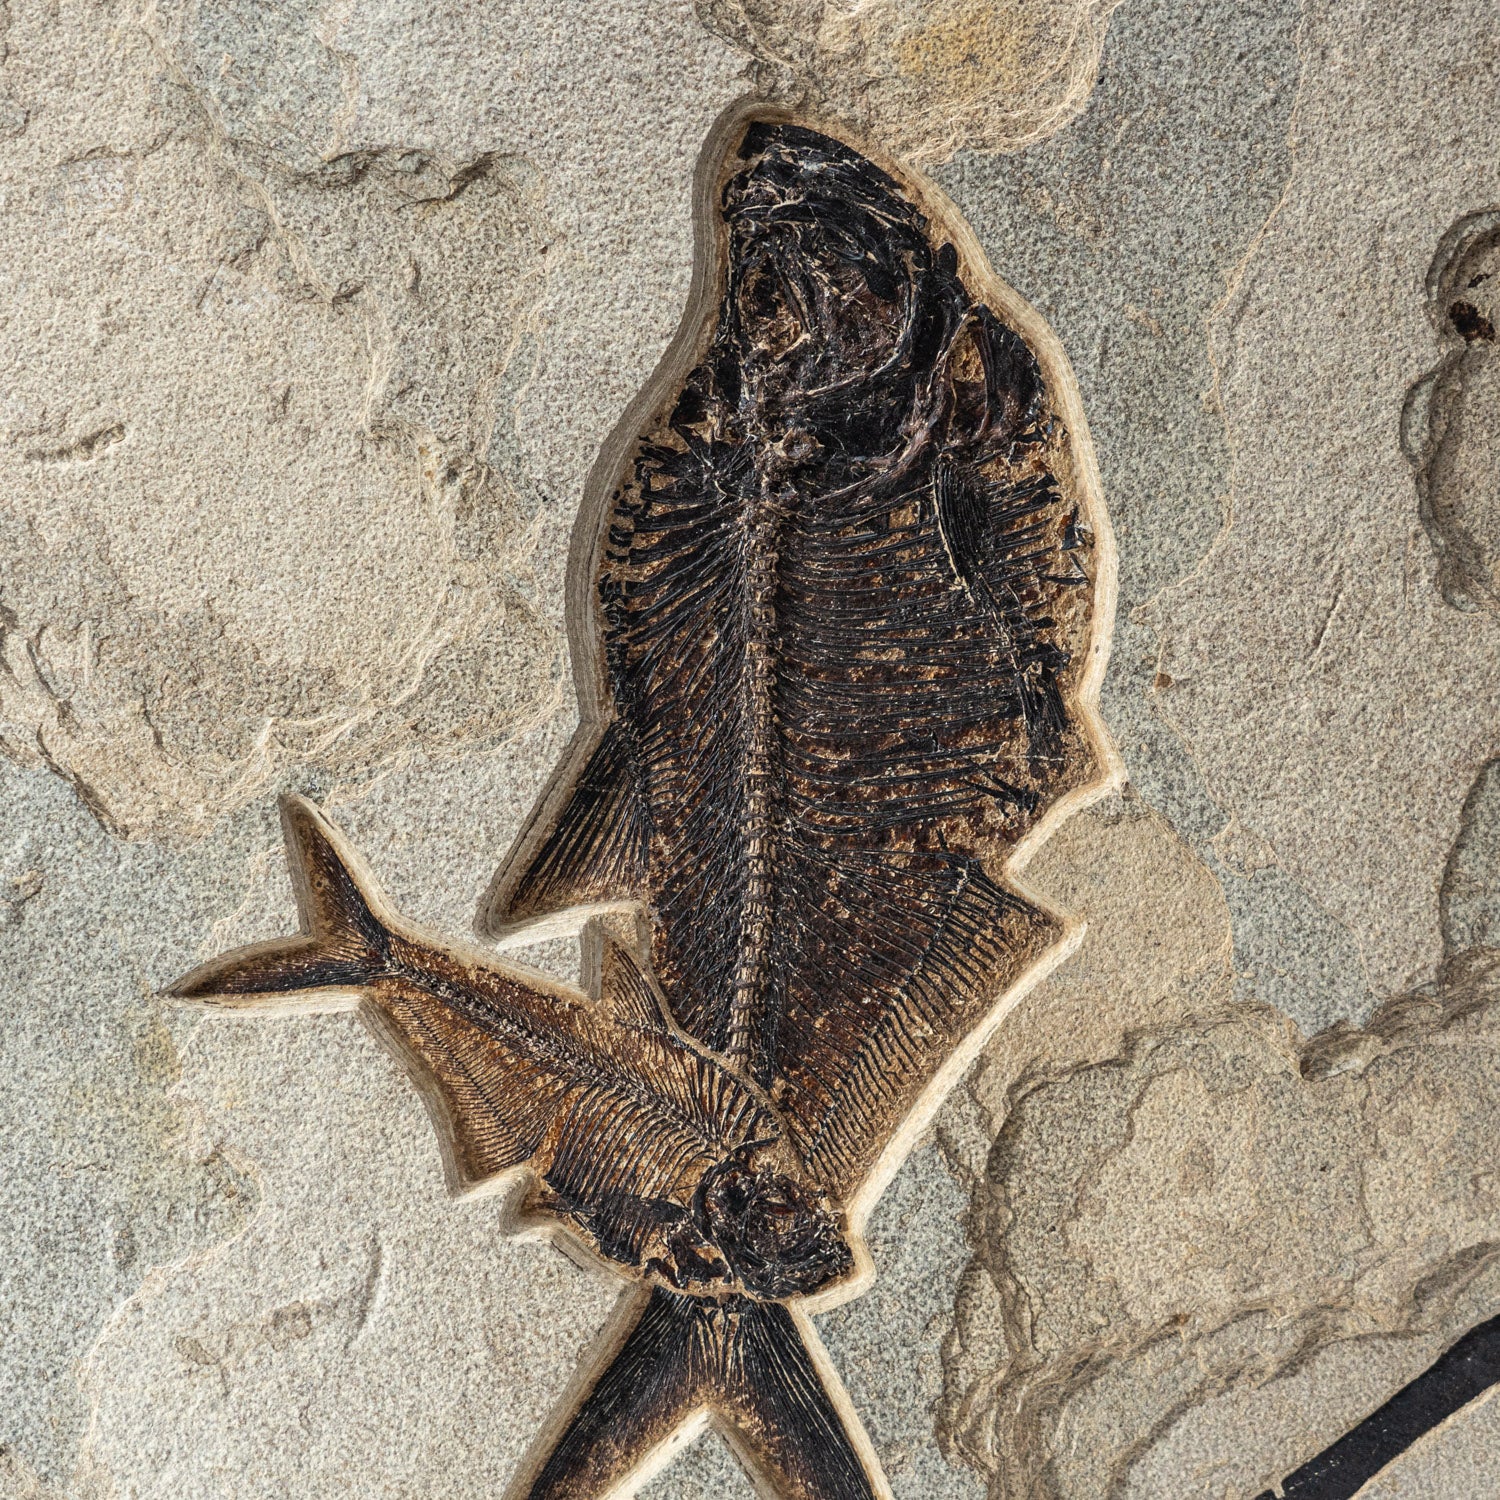 Giant Diplomytus Fish Fossil Plate (60.2 lbs)